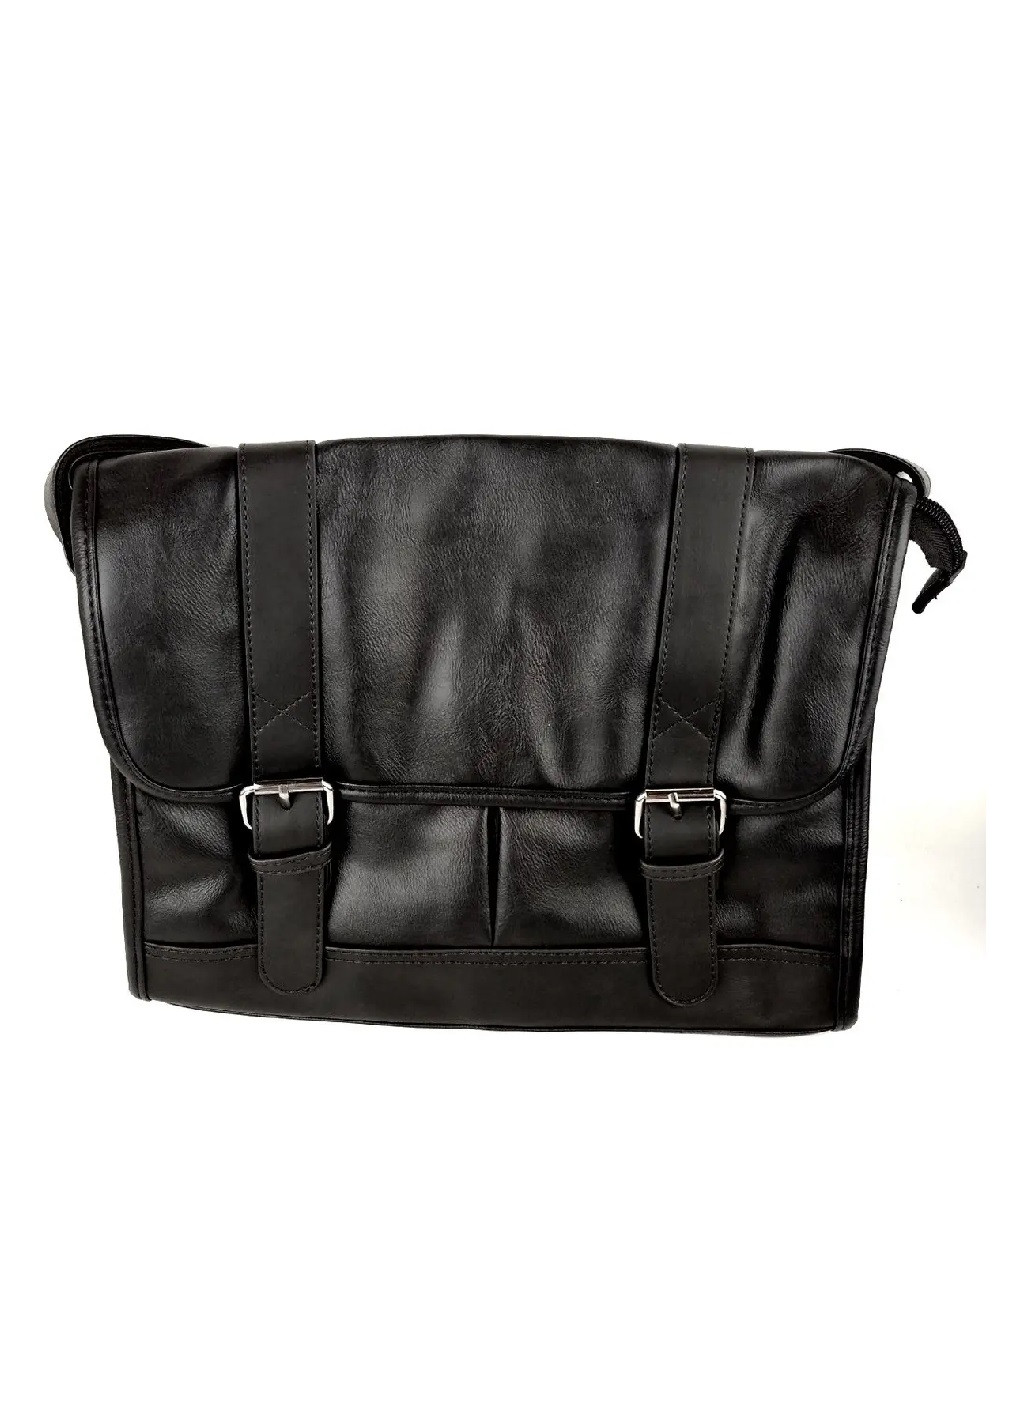 Чоловіча стильна практична компактна повсякденна сумка через плече з екошкіри 34х25х7 см (475517-Prob) Чорна Unbranded (268369388)